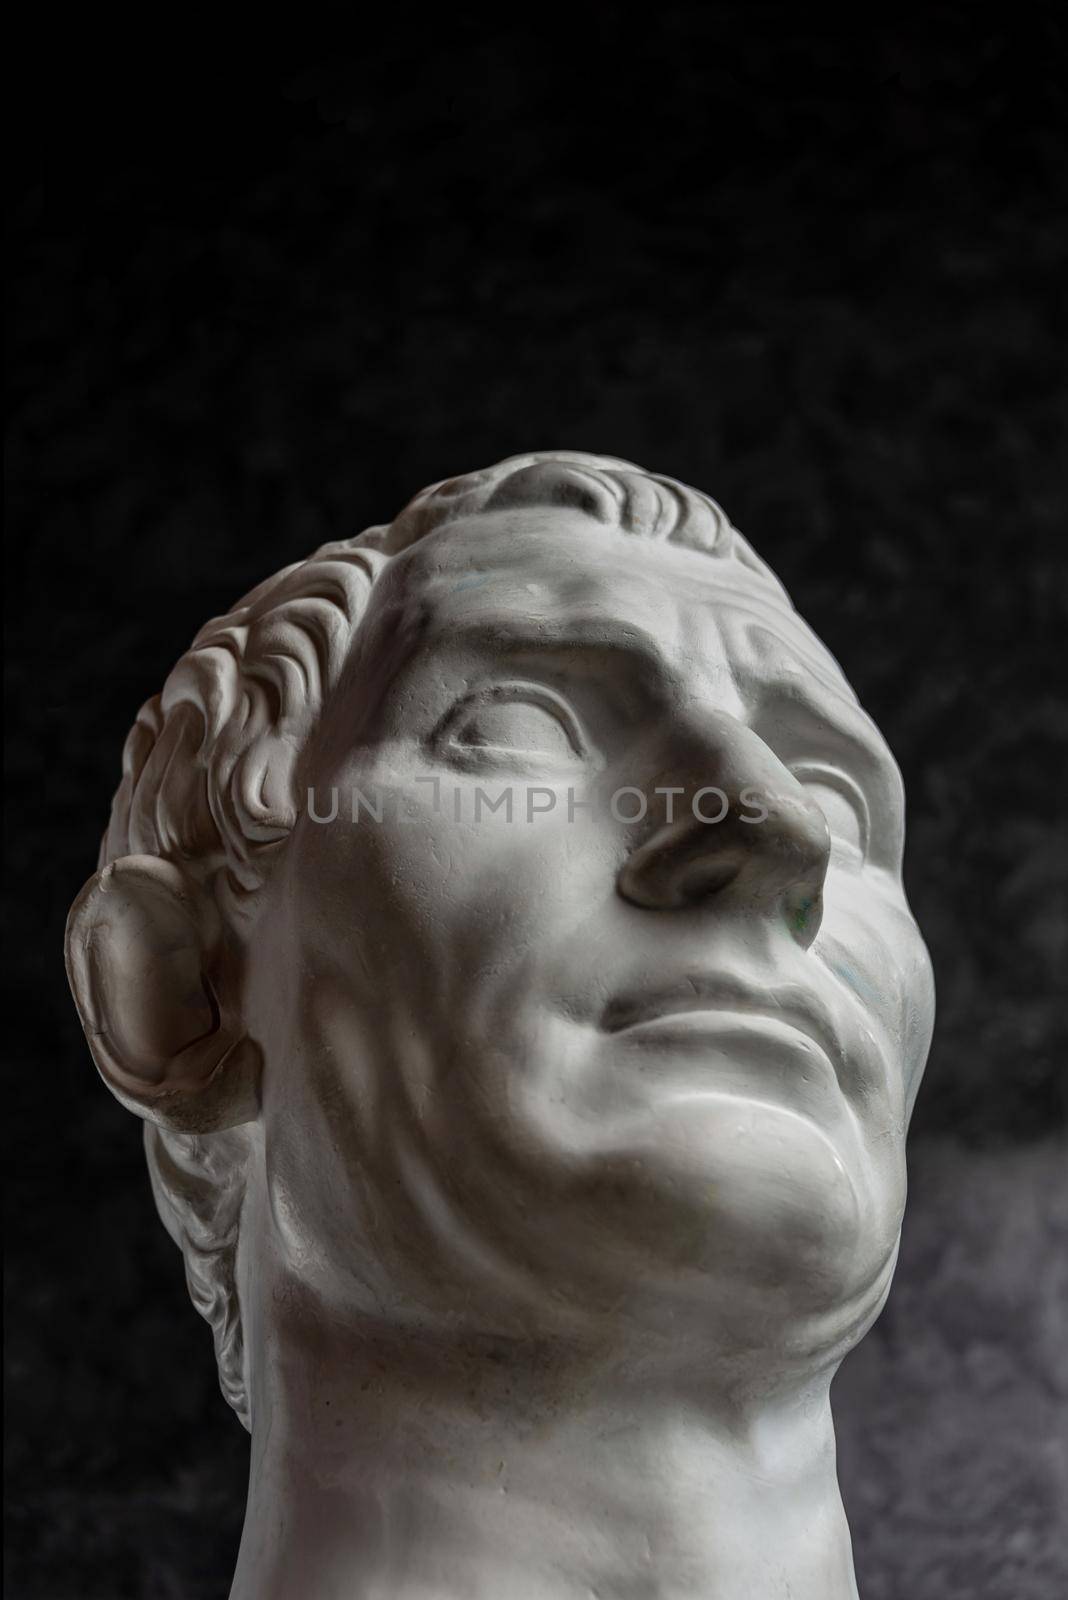 White gypsum copy of ancient statue of Guy Julius Caesar Octavian Augustus head for artists on a dark textured background. Plaster sculpture of man face.